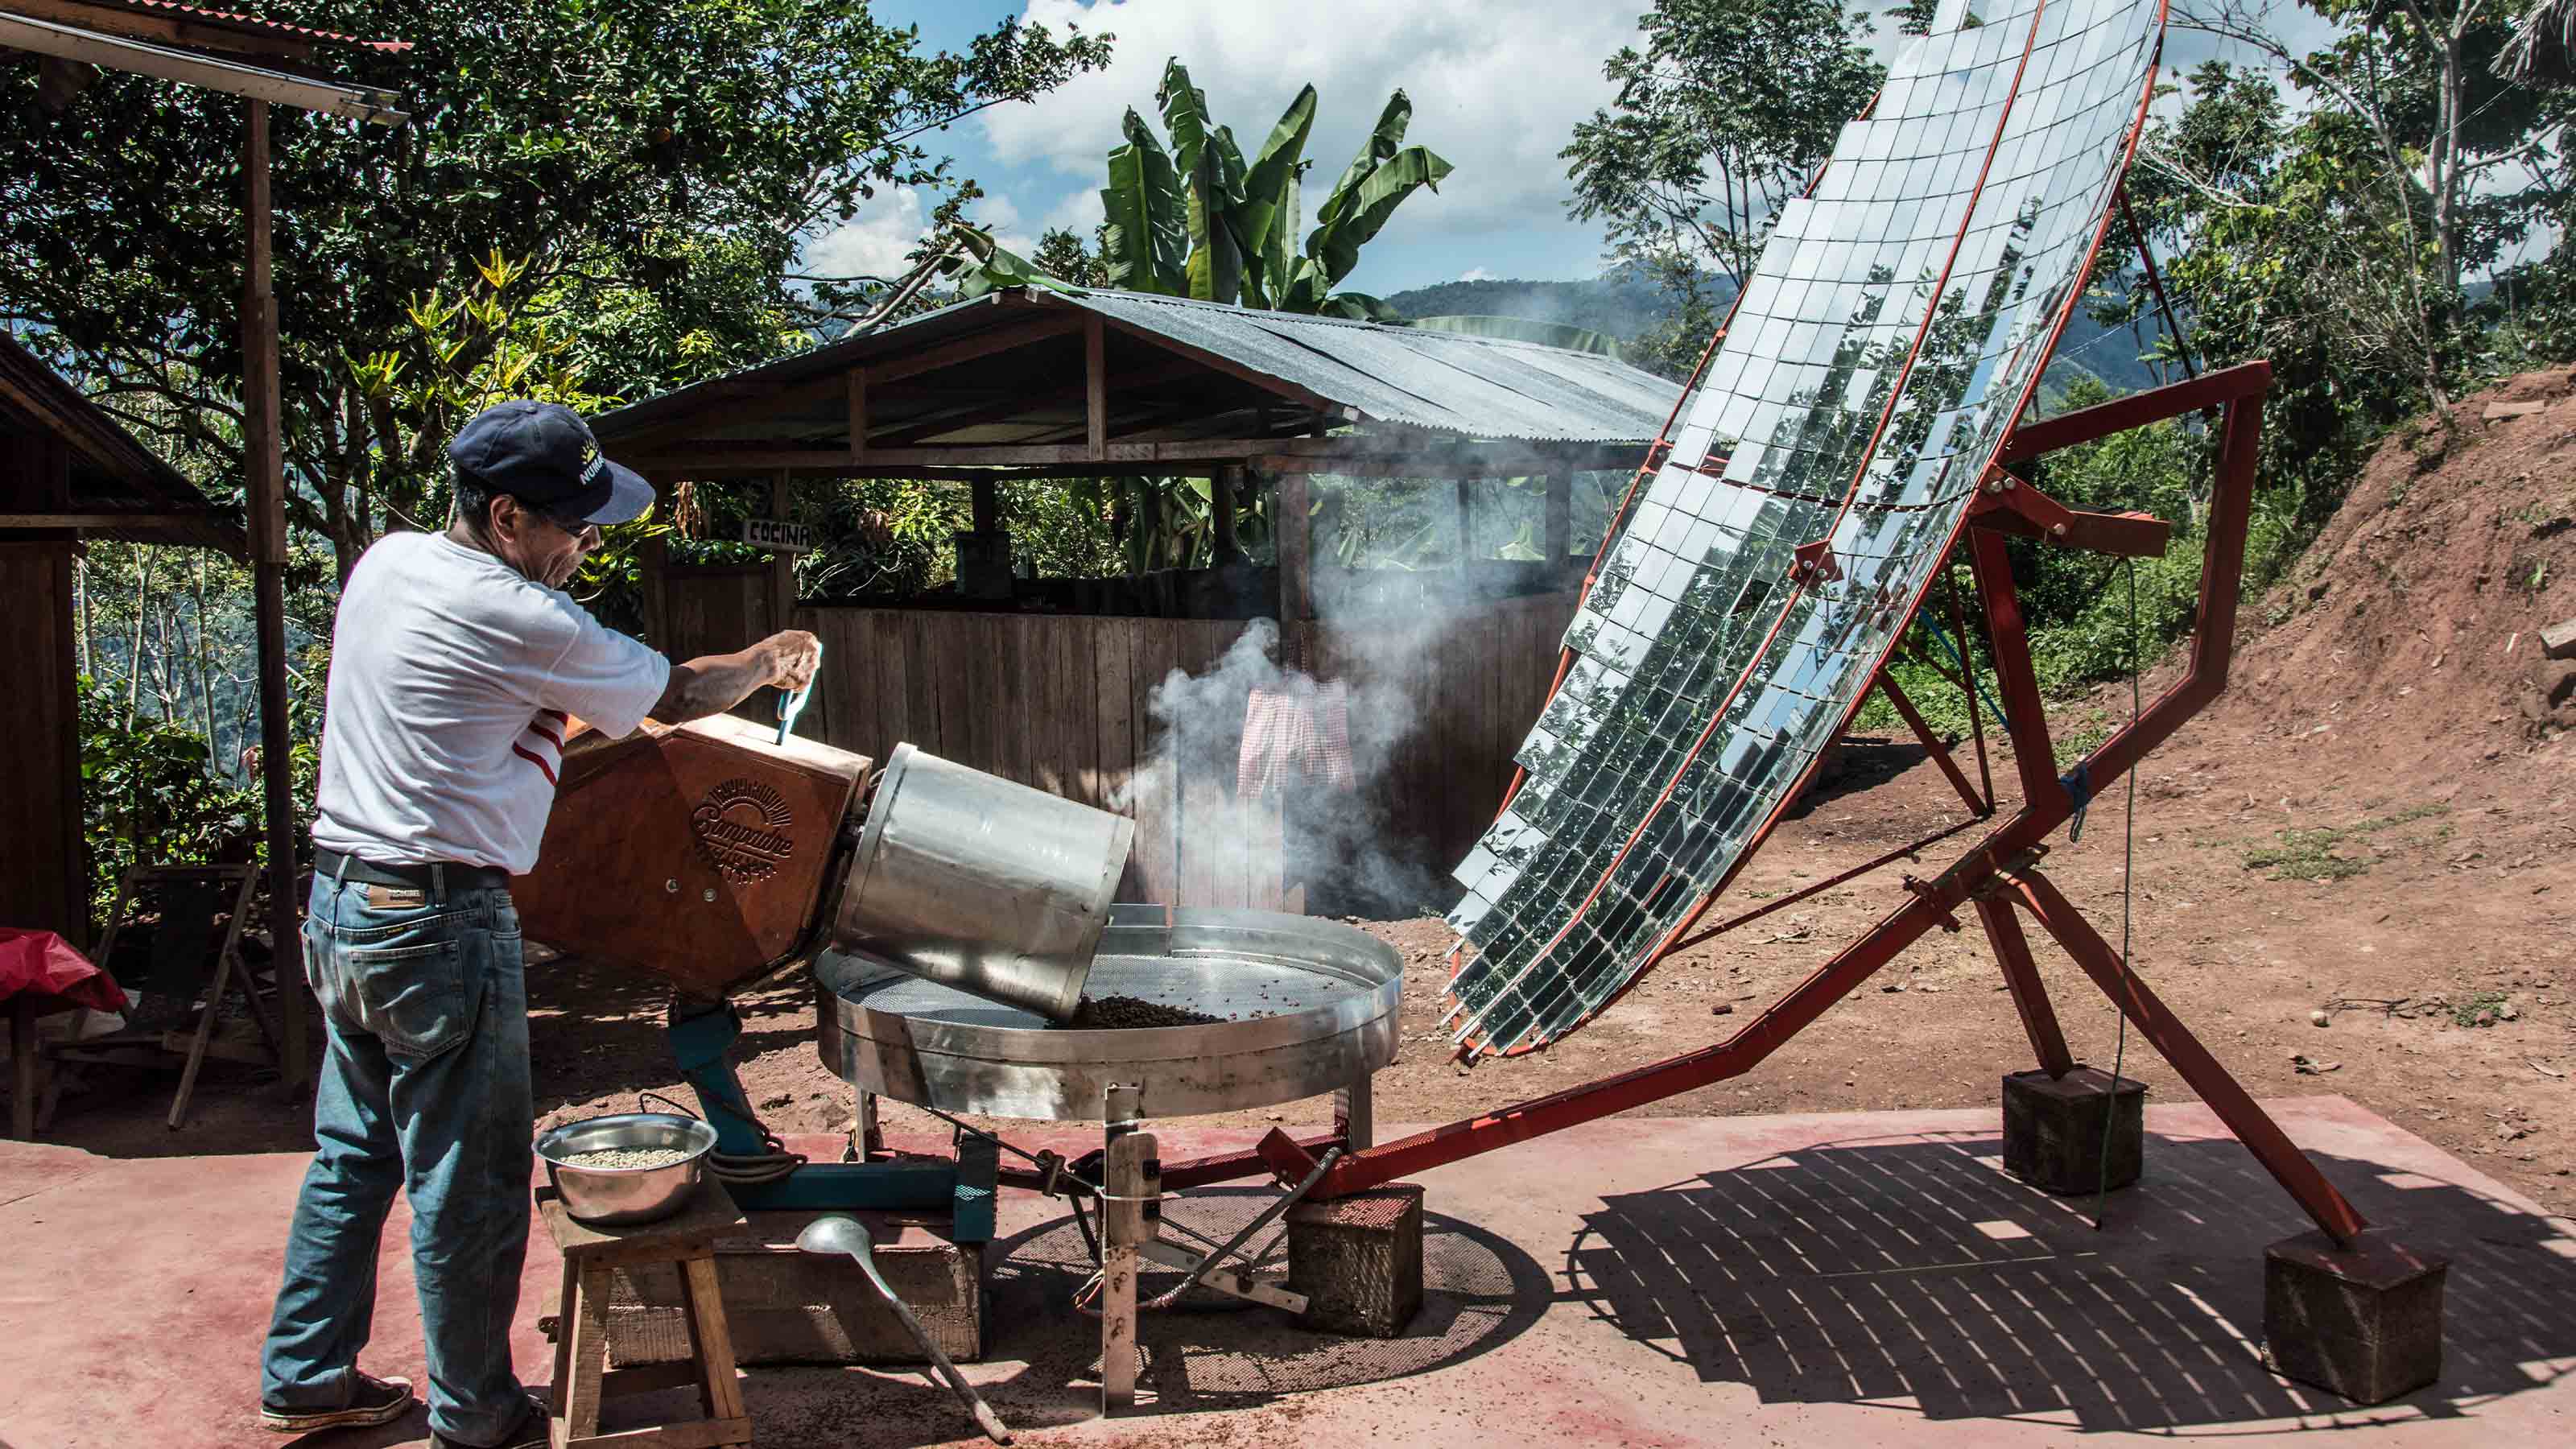 Man roasting coffee via solar power